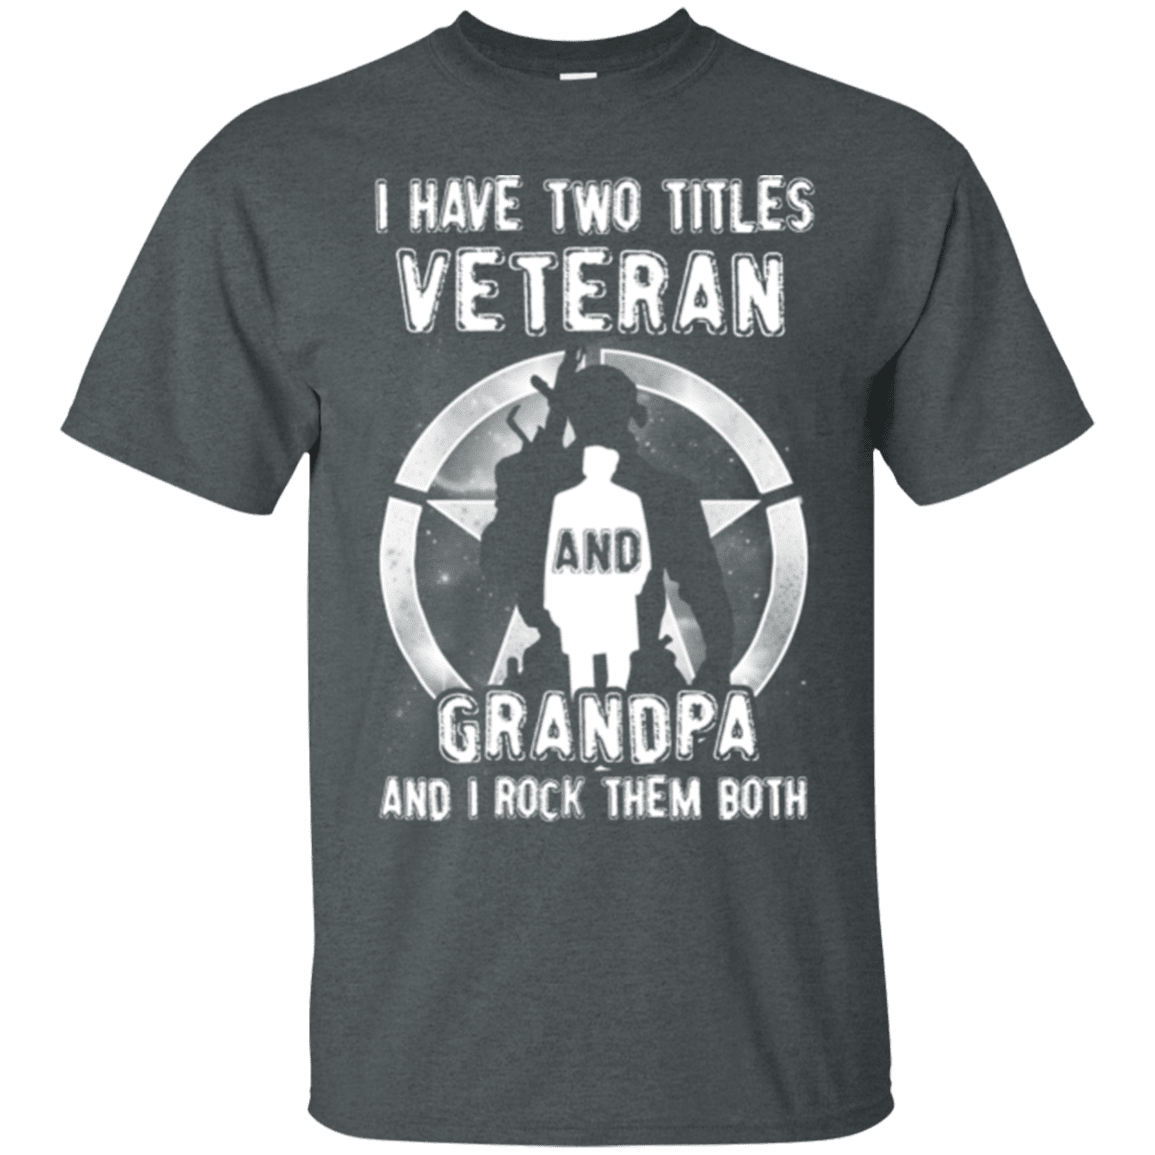 Military T-Shirt "I HAVE TWO TITLES VETERAN AND GRANDPA"-TShirt-General-Veterans Nation